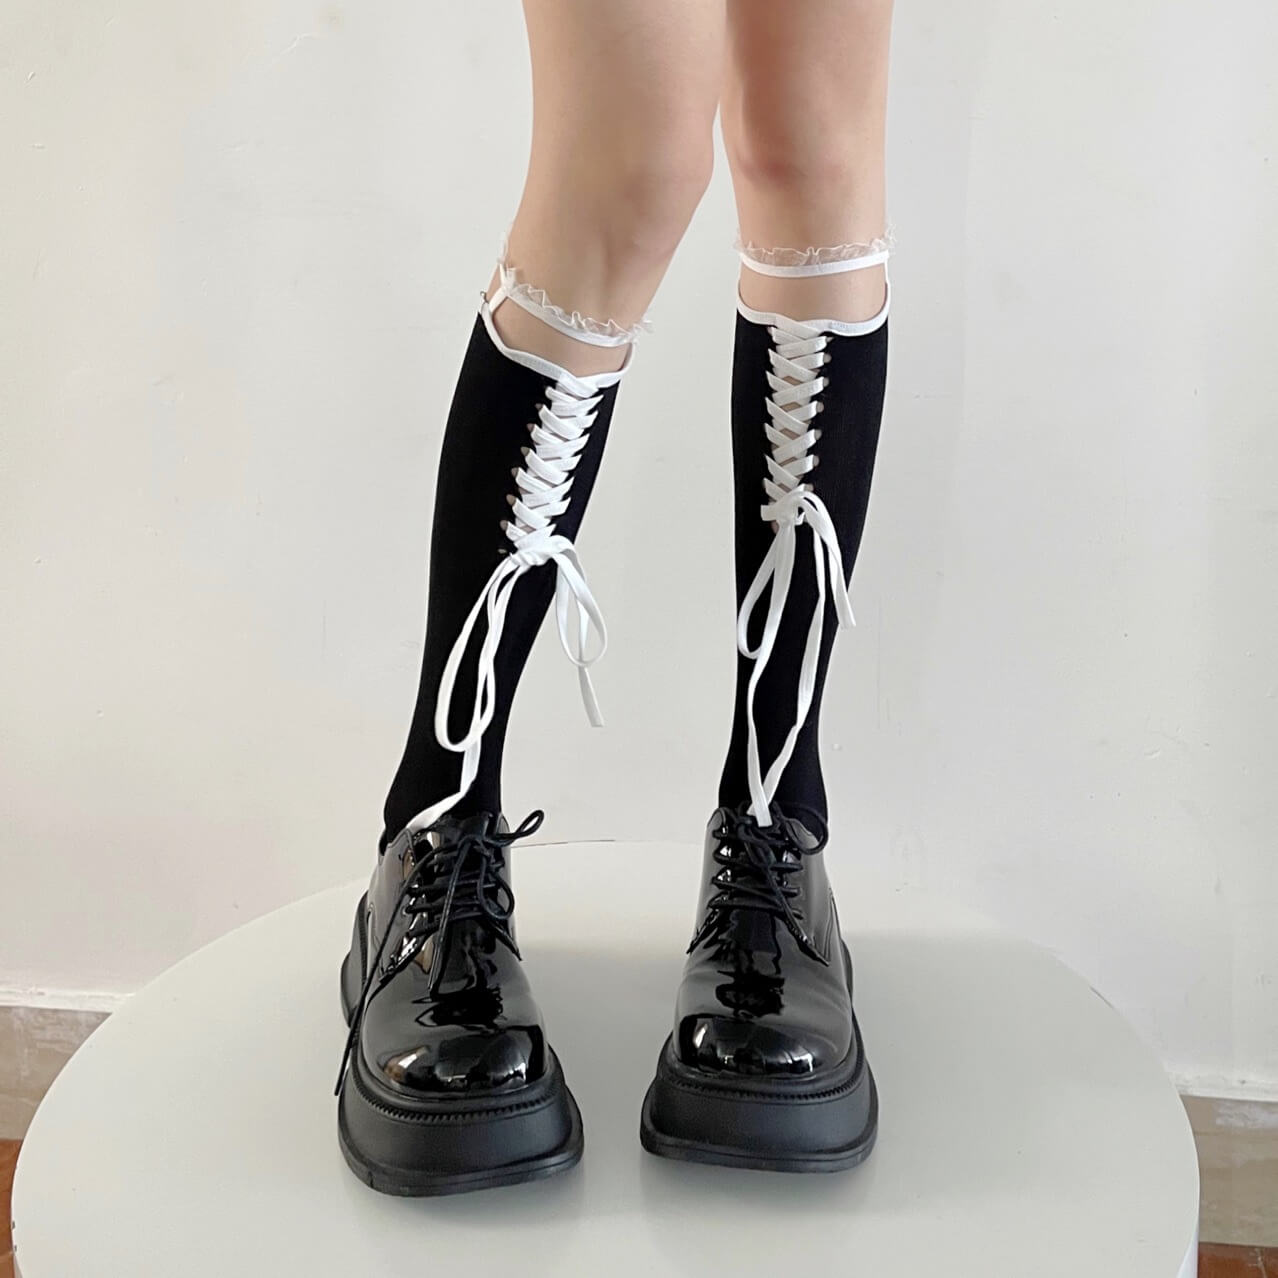 cutiekill-lolita-lace-ribbon-stockings-c0247